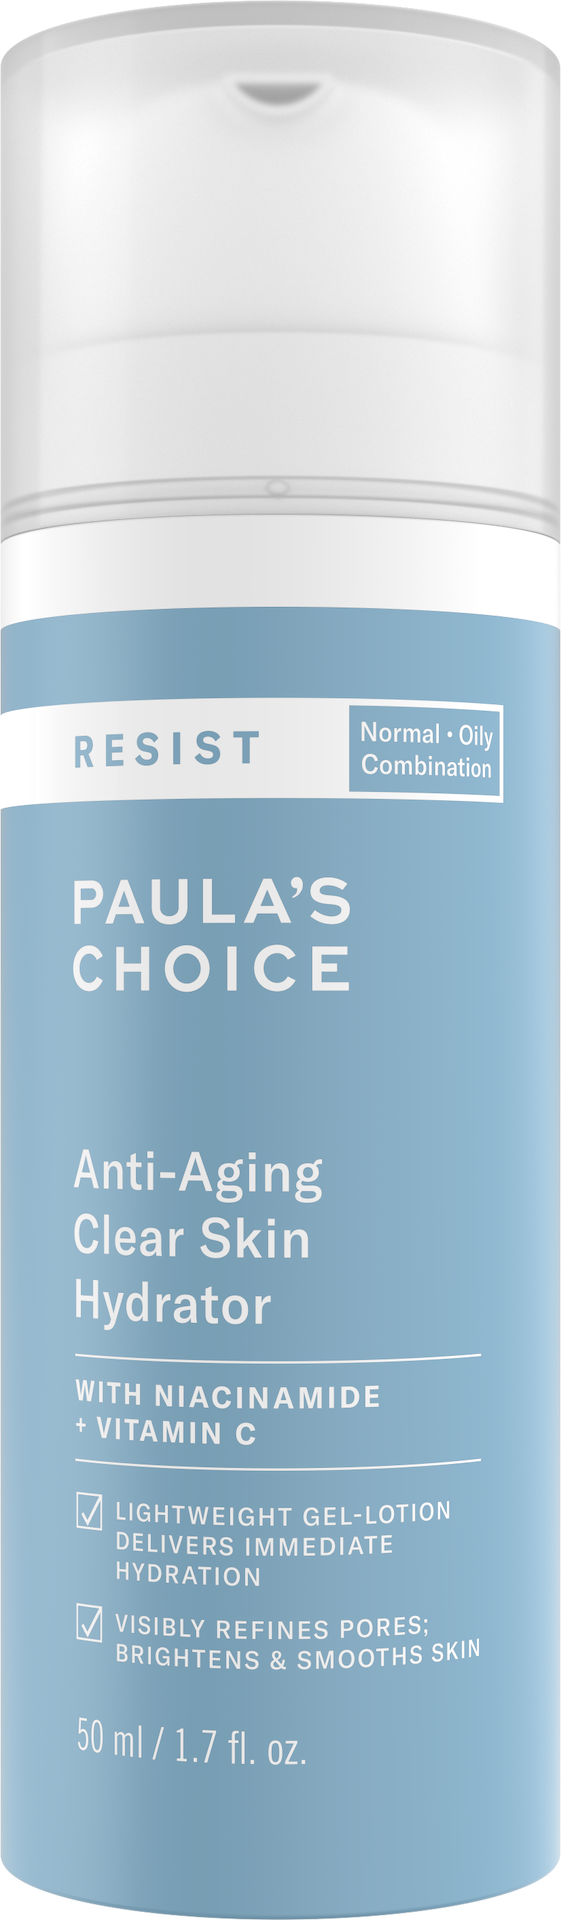 Resist Anti-Aging Clear Skin Hydrator 50 ml